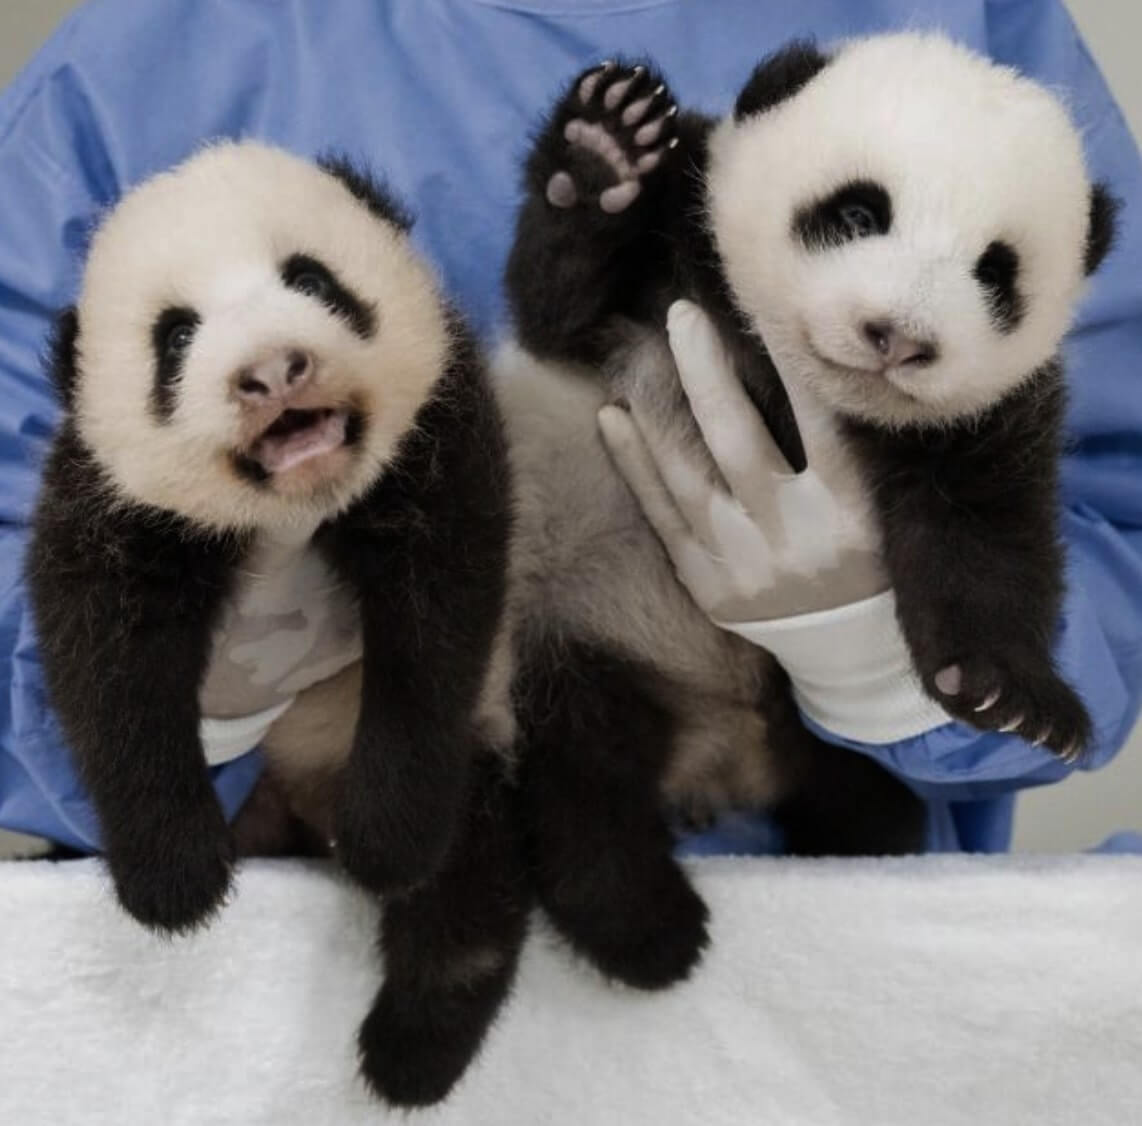 Twin Baby Pandas